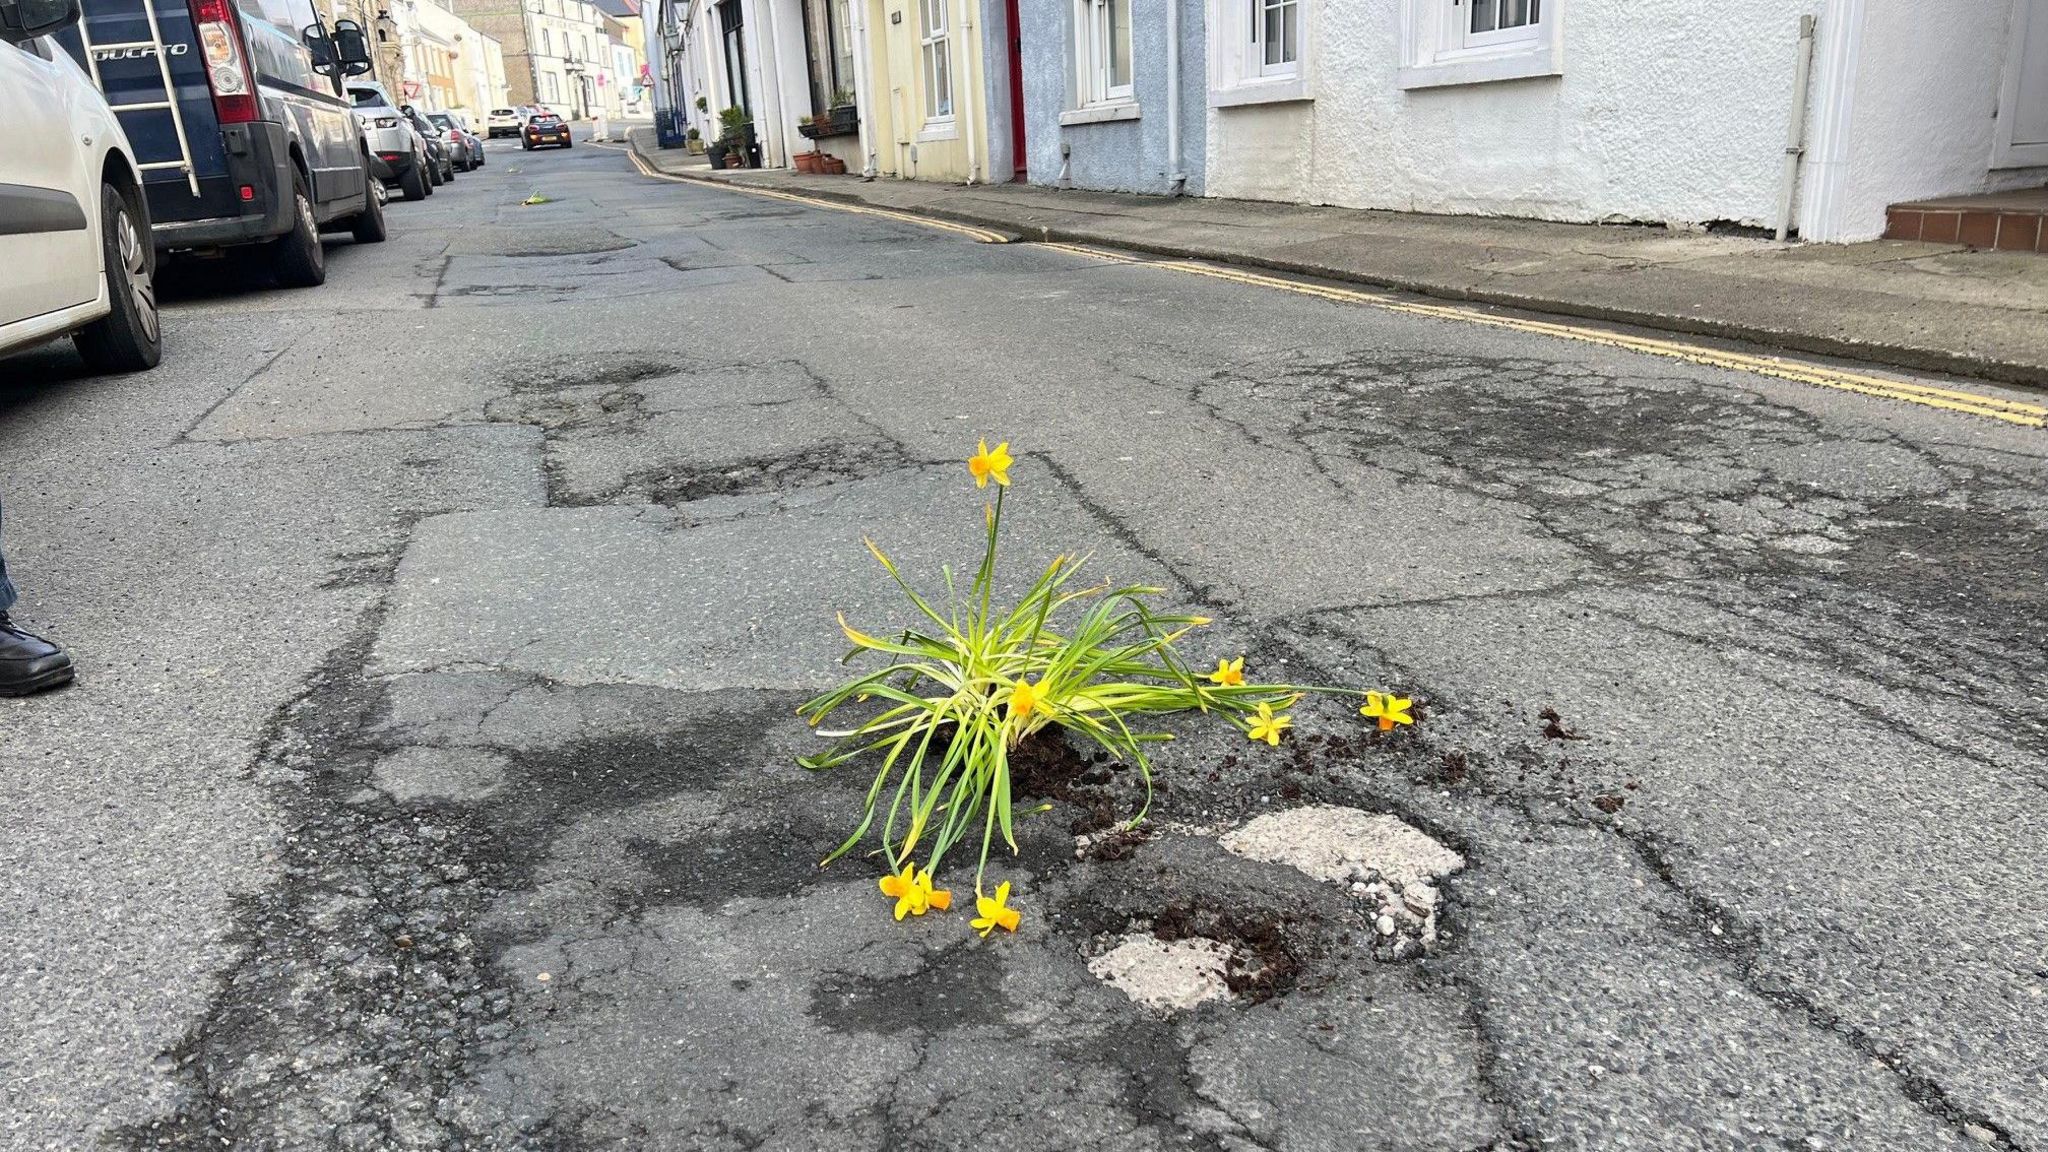 Daffodils in potholes